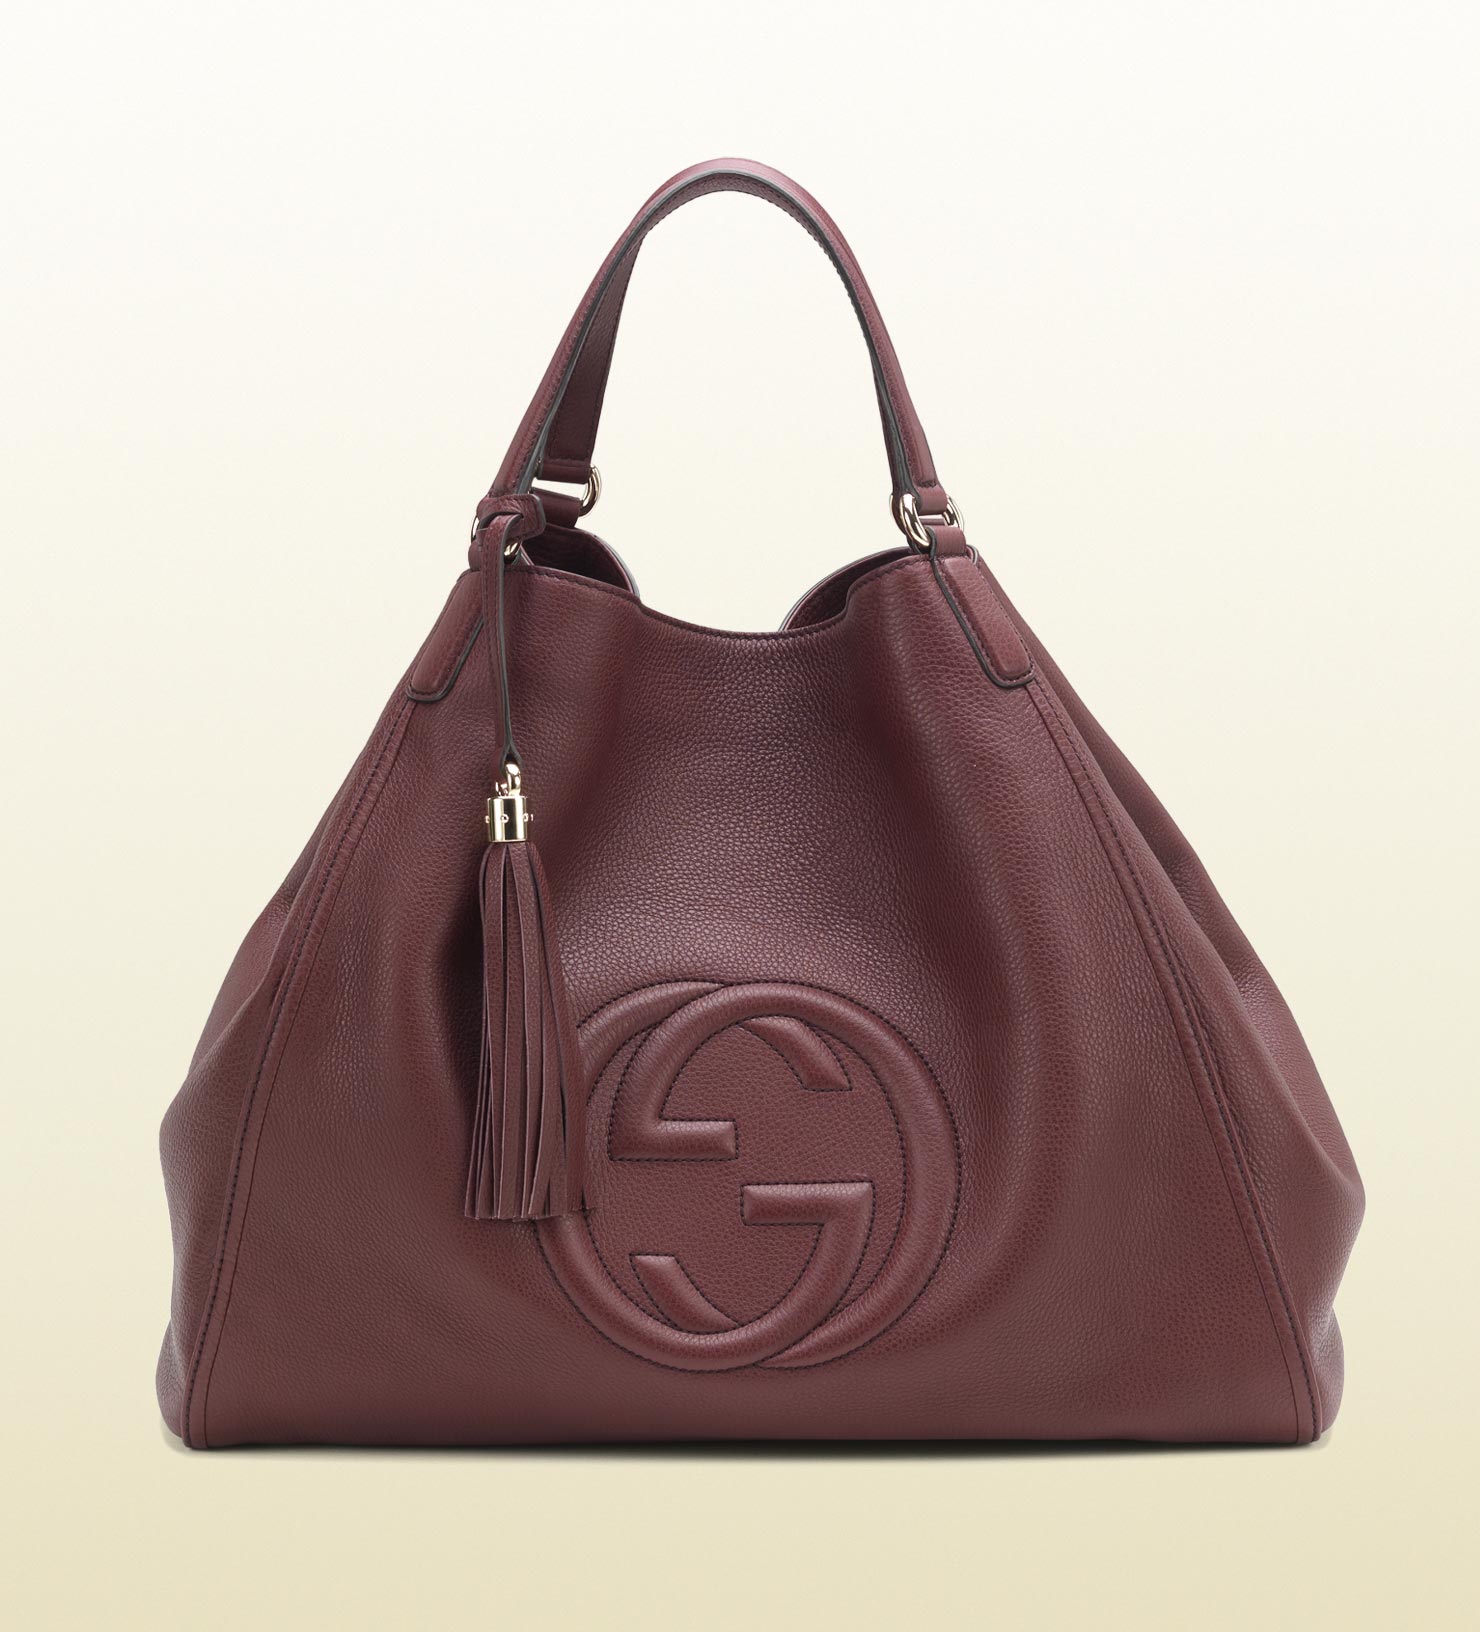 Gucci Soho Bordeaux Leather Shoulder Bag in Brown - Lyst